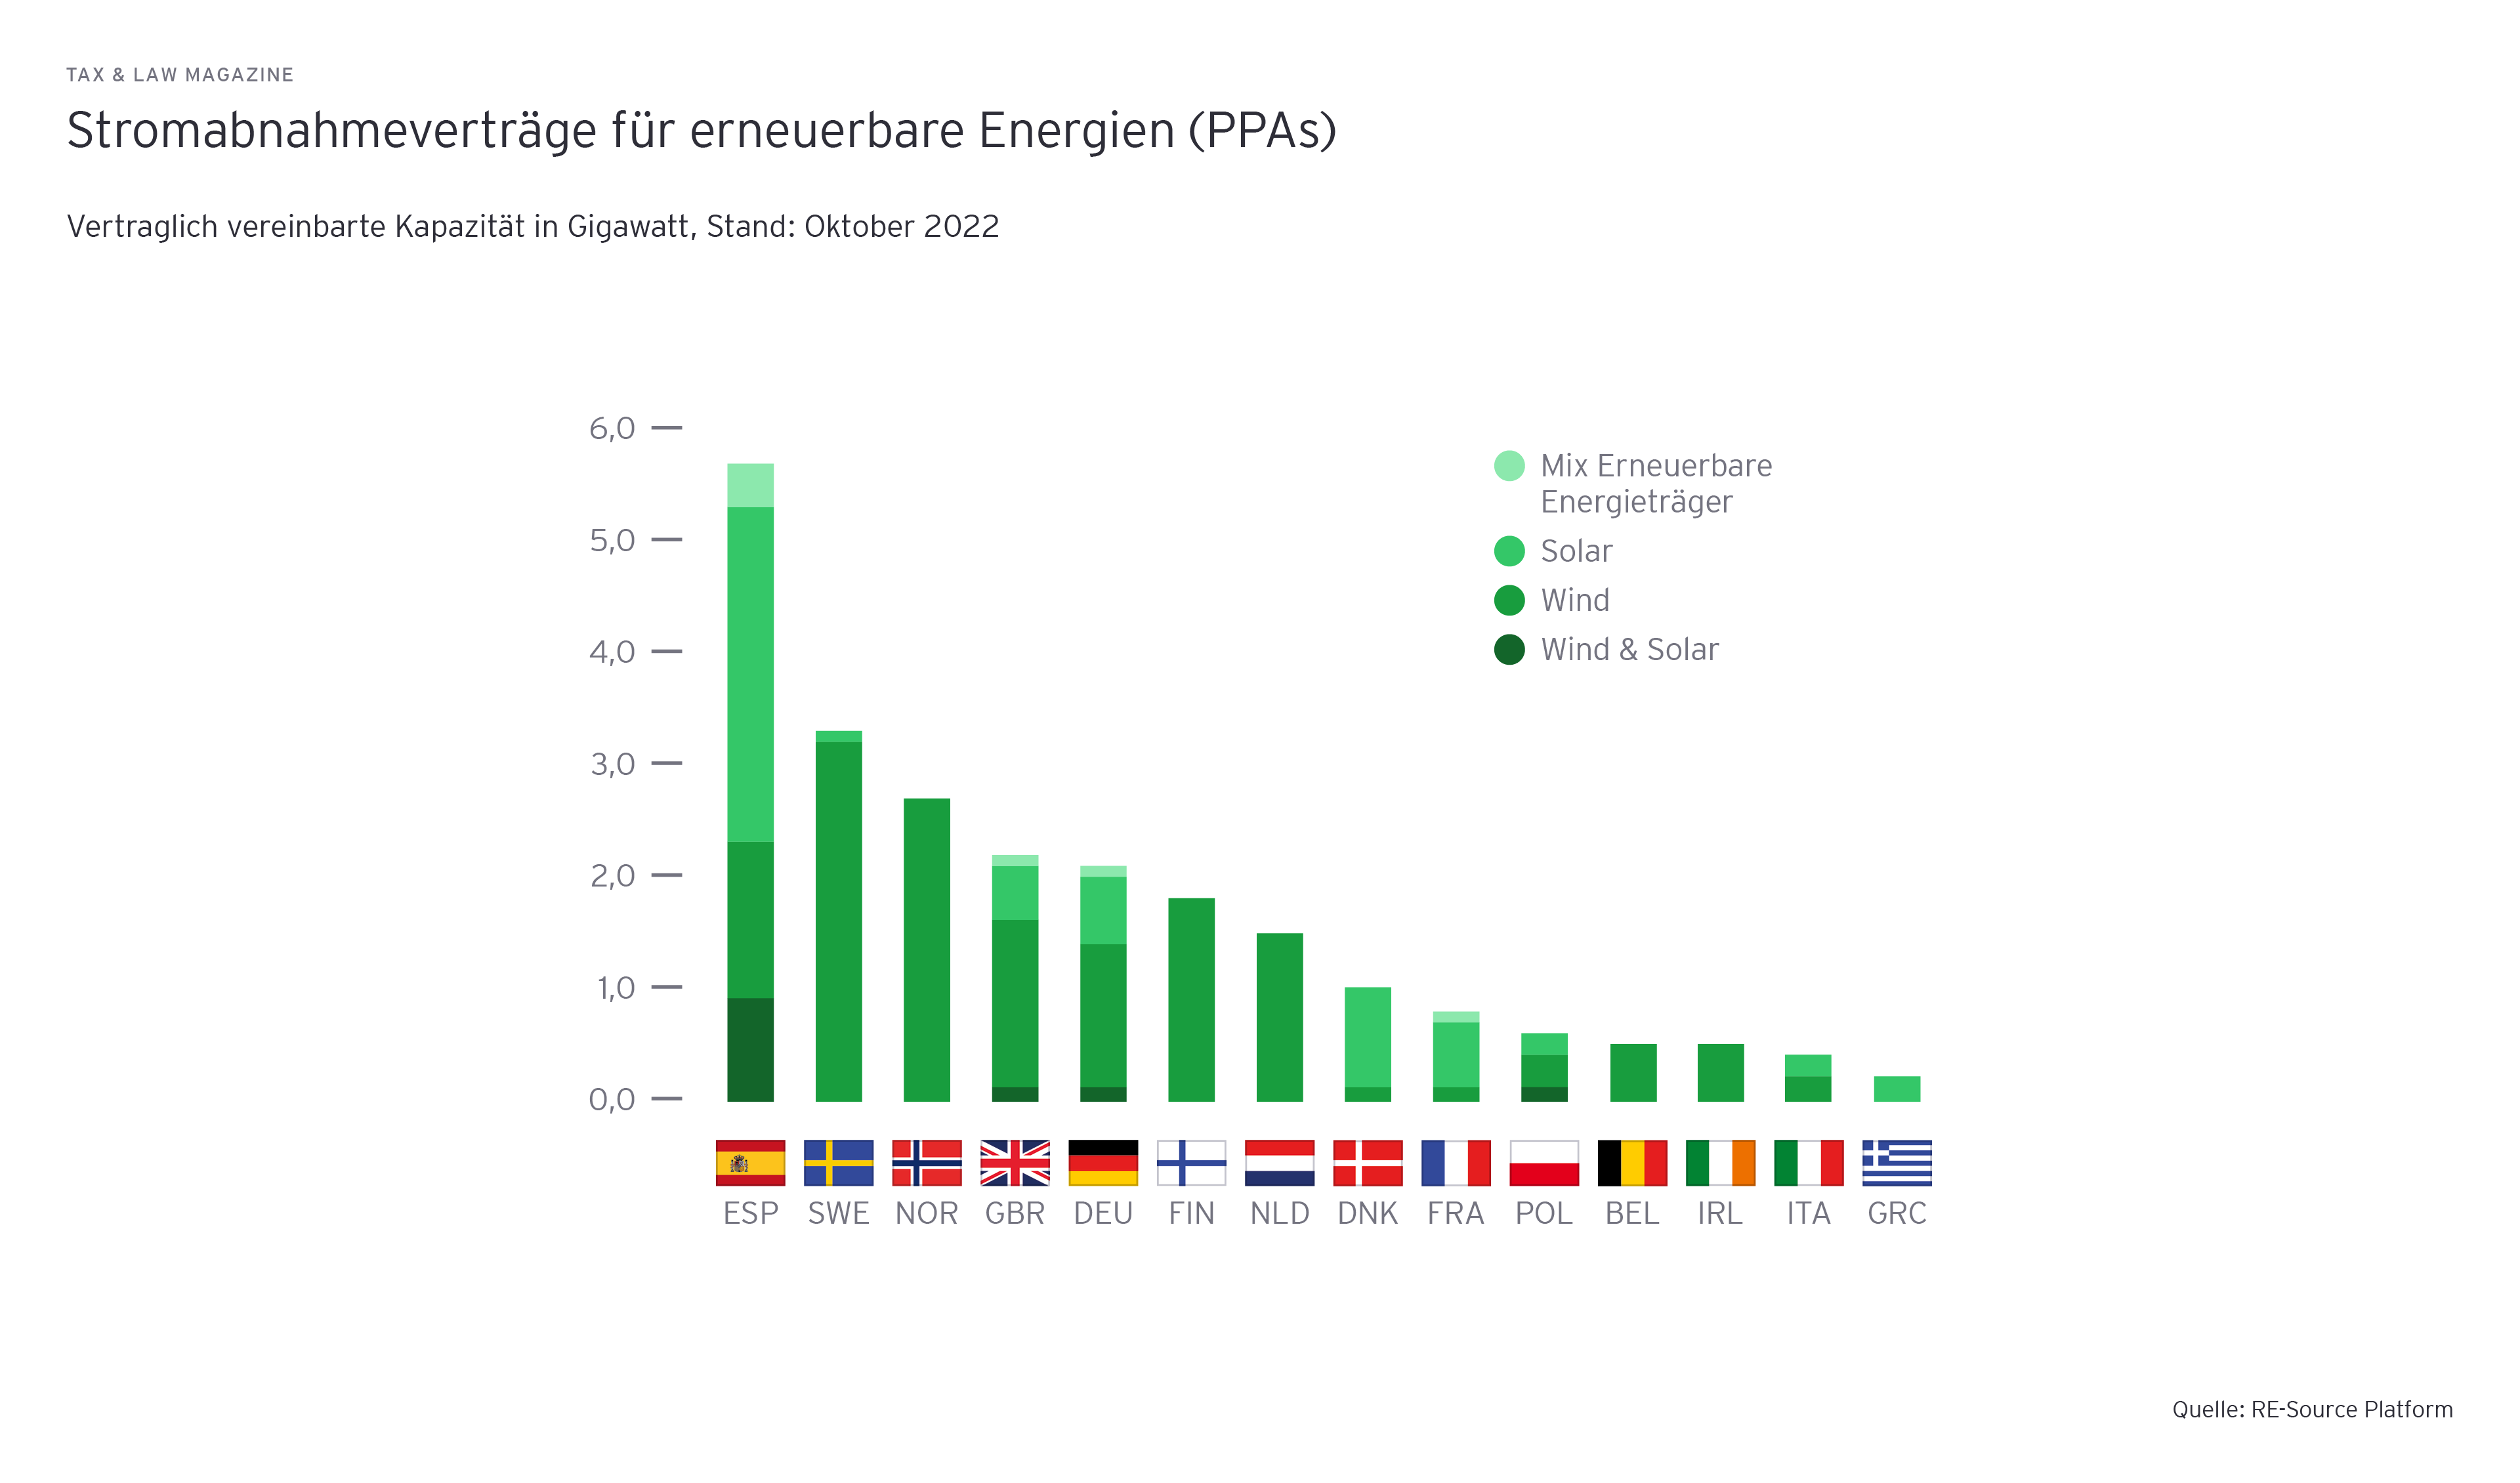 Stromabnahmevertraege fuer erneuerbare Energien (PPAs)